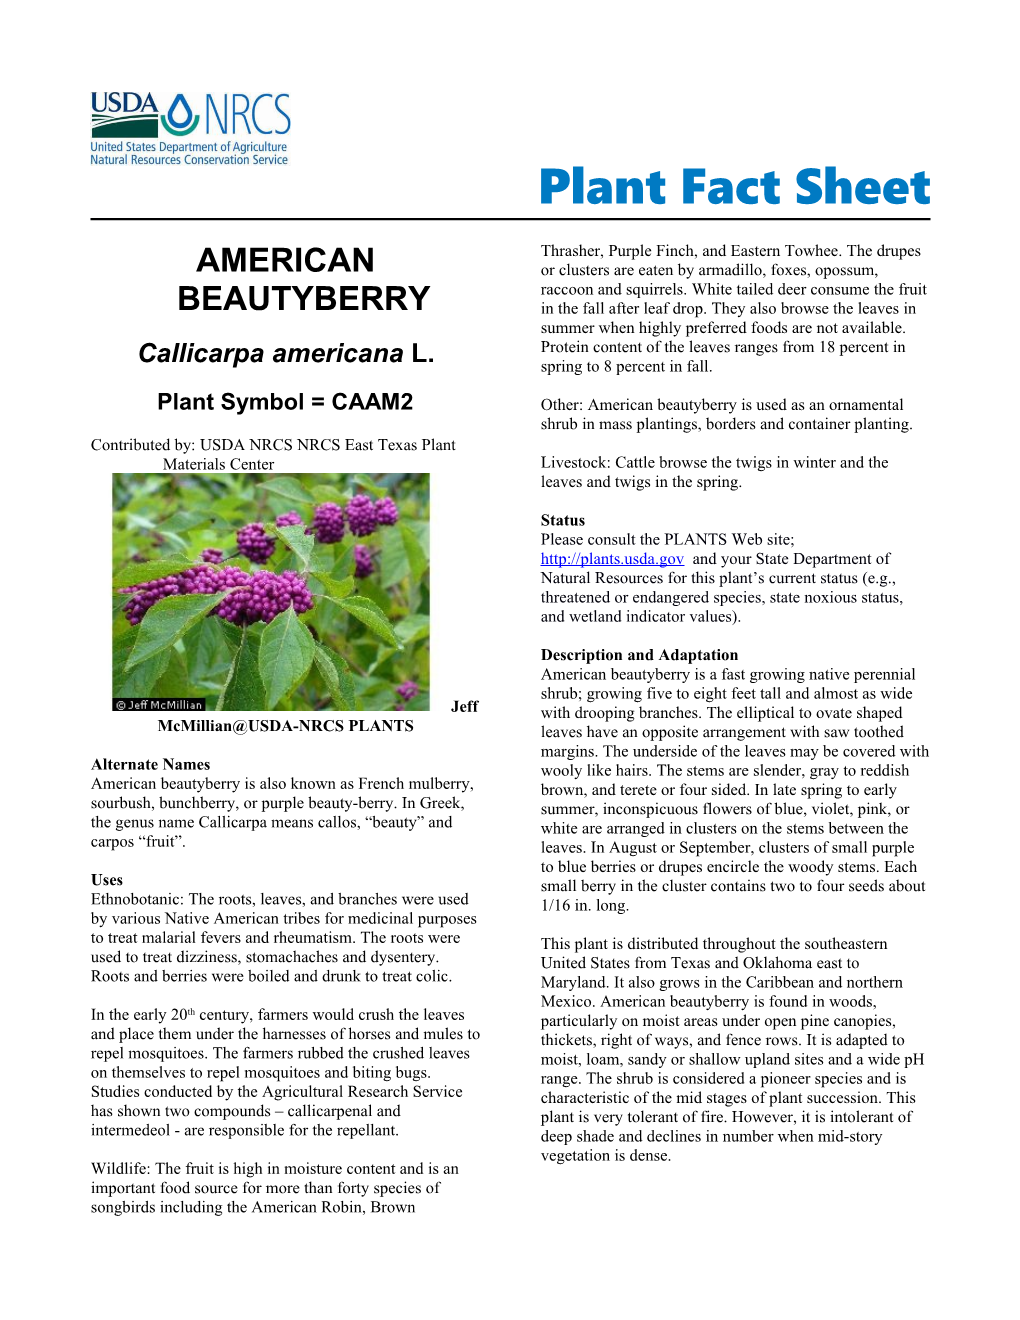 American Beautyberry (Callicarpa Americana) Plant Fact Sheet